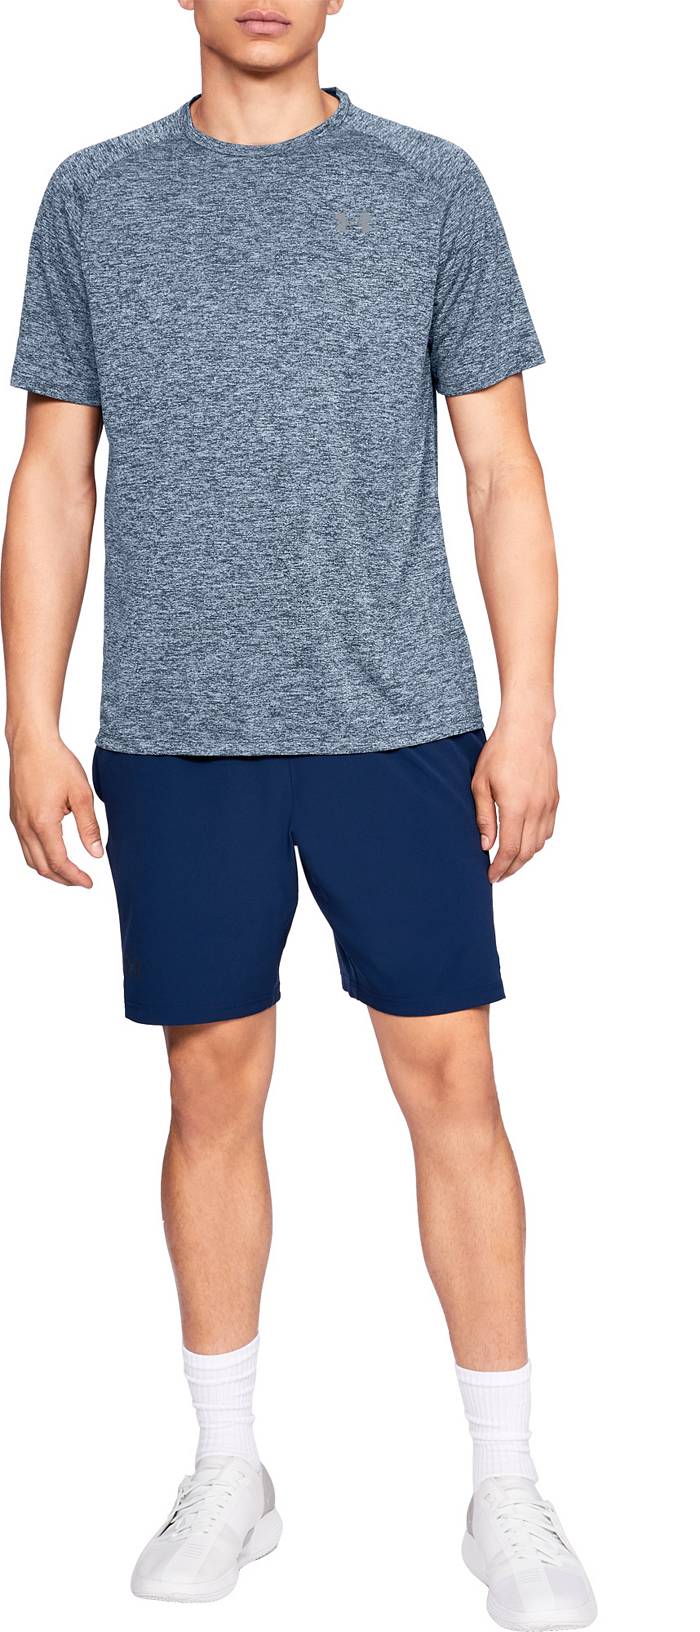 Oklahoma City Dodgers Under Armour Tech T-shirt - Shibtee Clothing